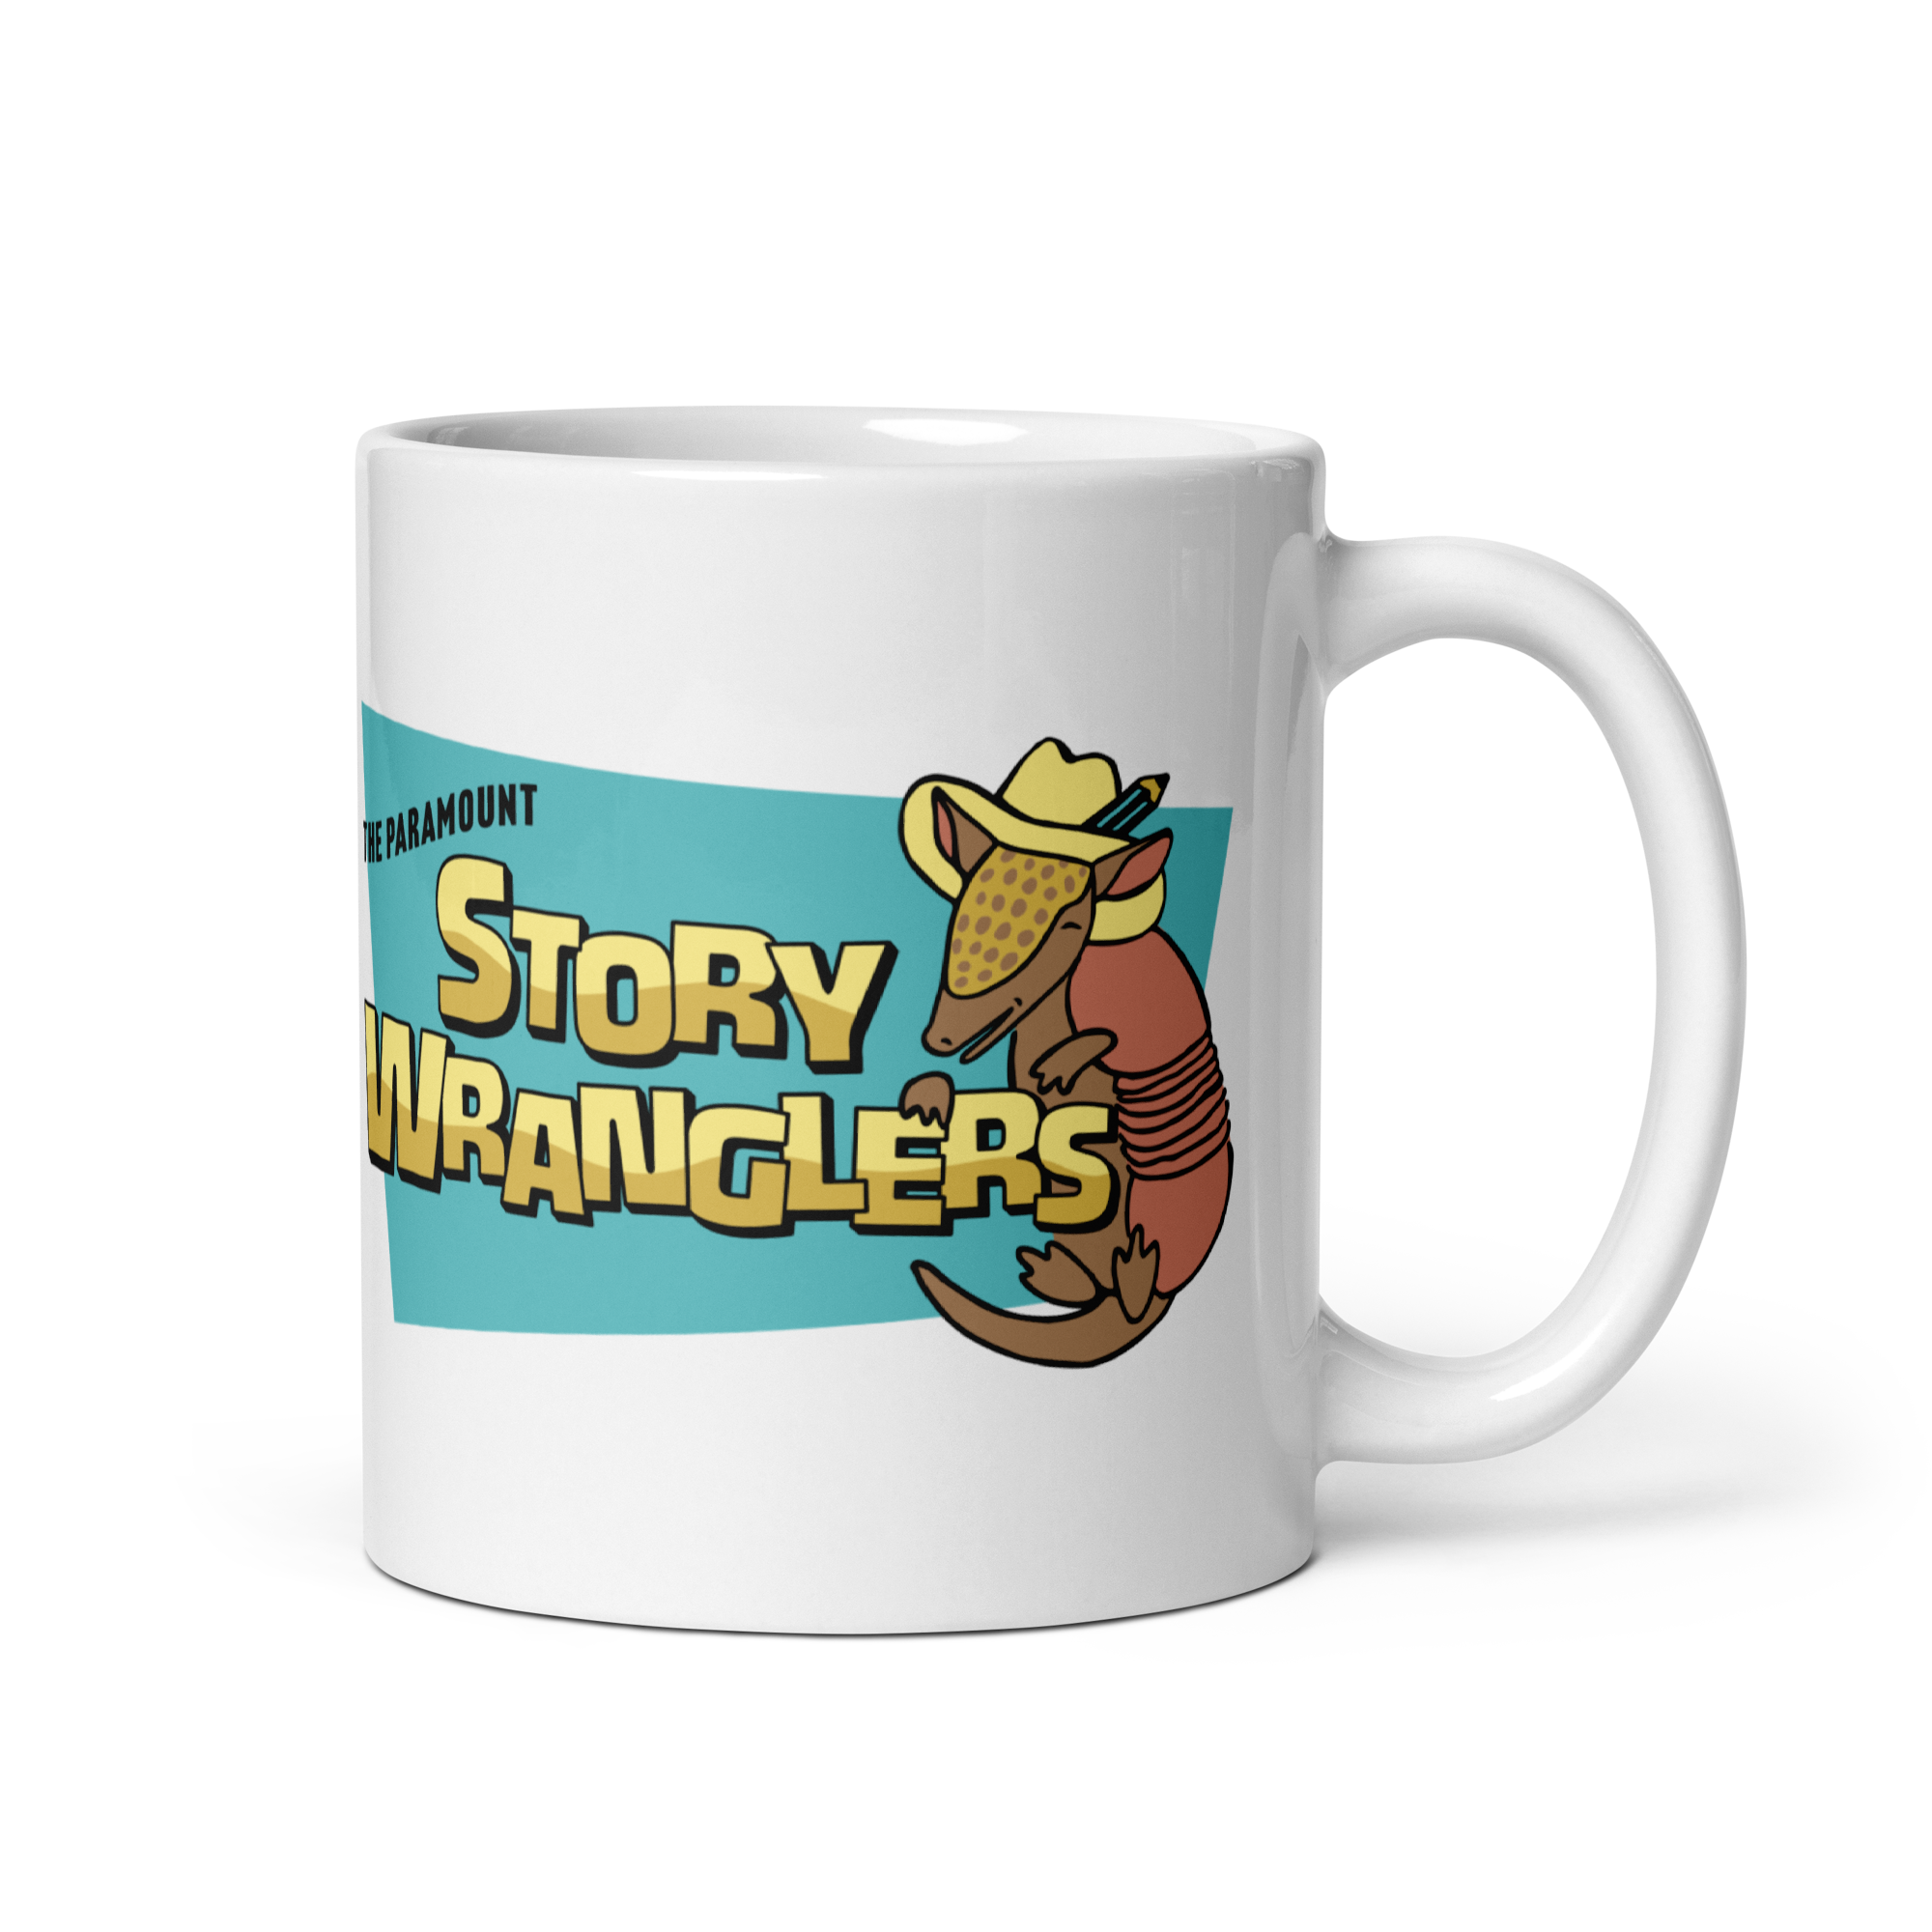 Paramount Story Wranglers Ceramic Mug